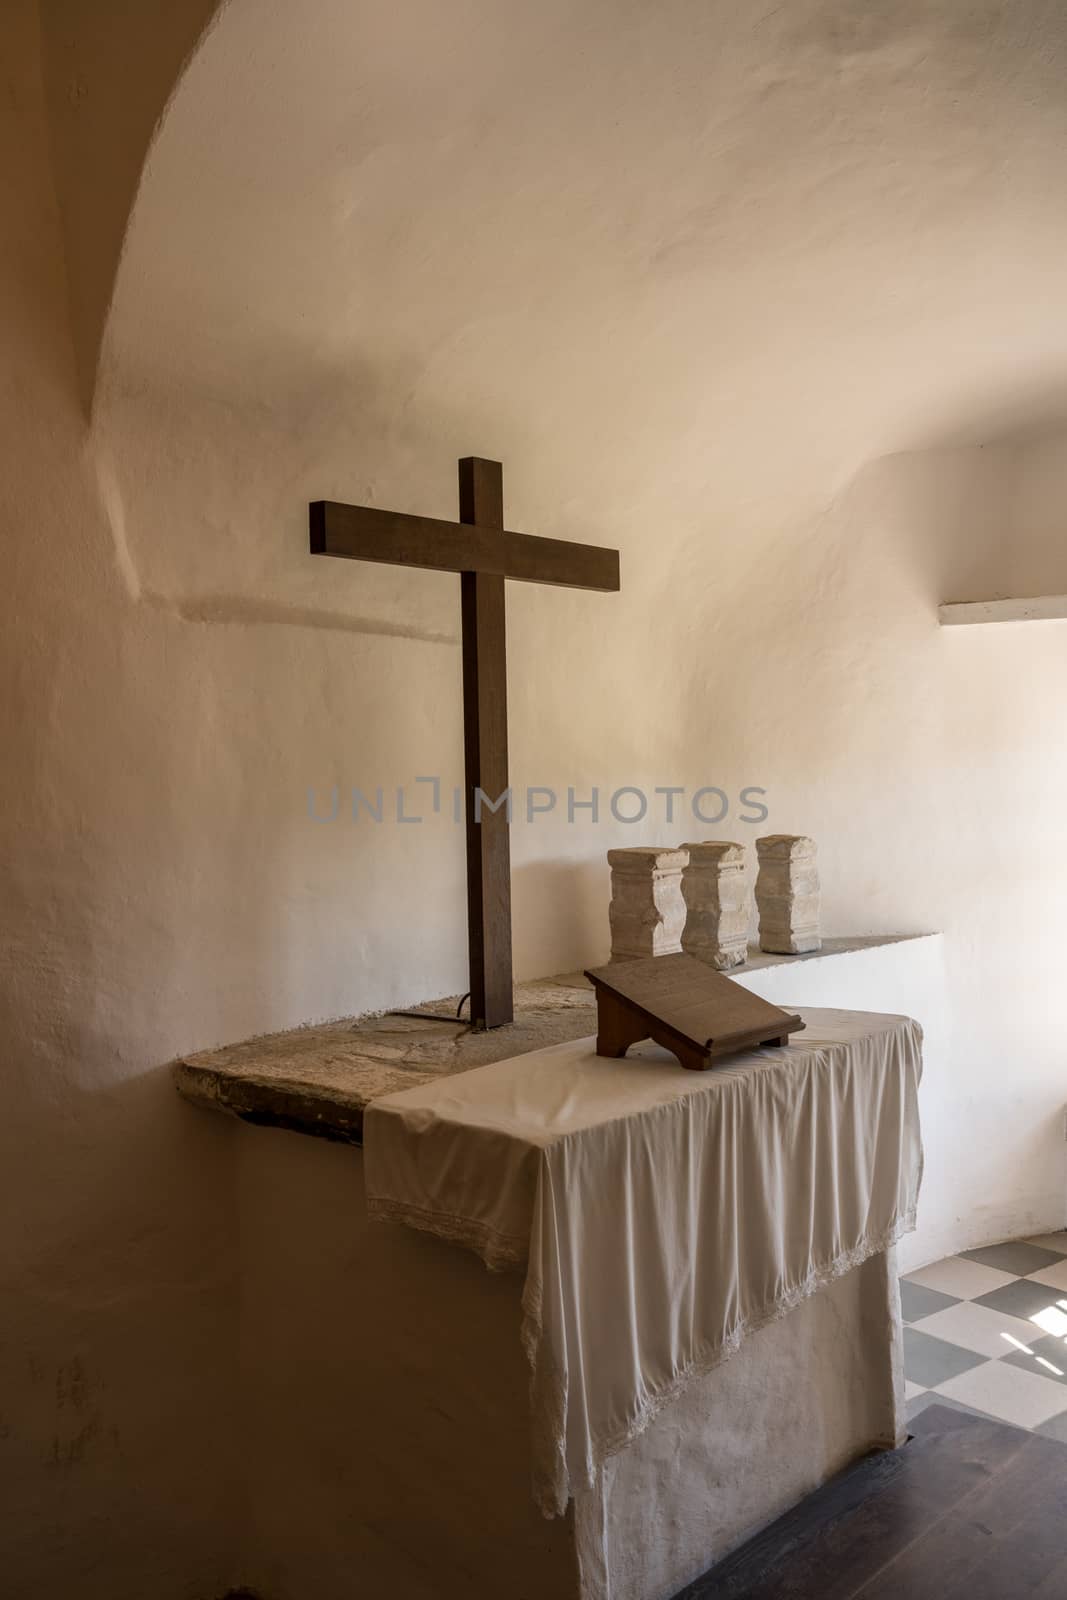 Plain church altar in Predjama castle built into a cave in Slovenia by steheap